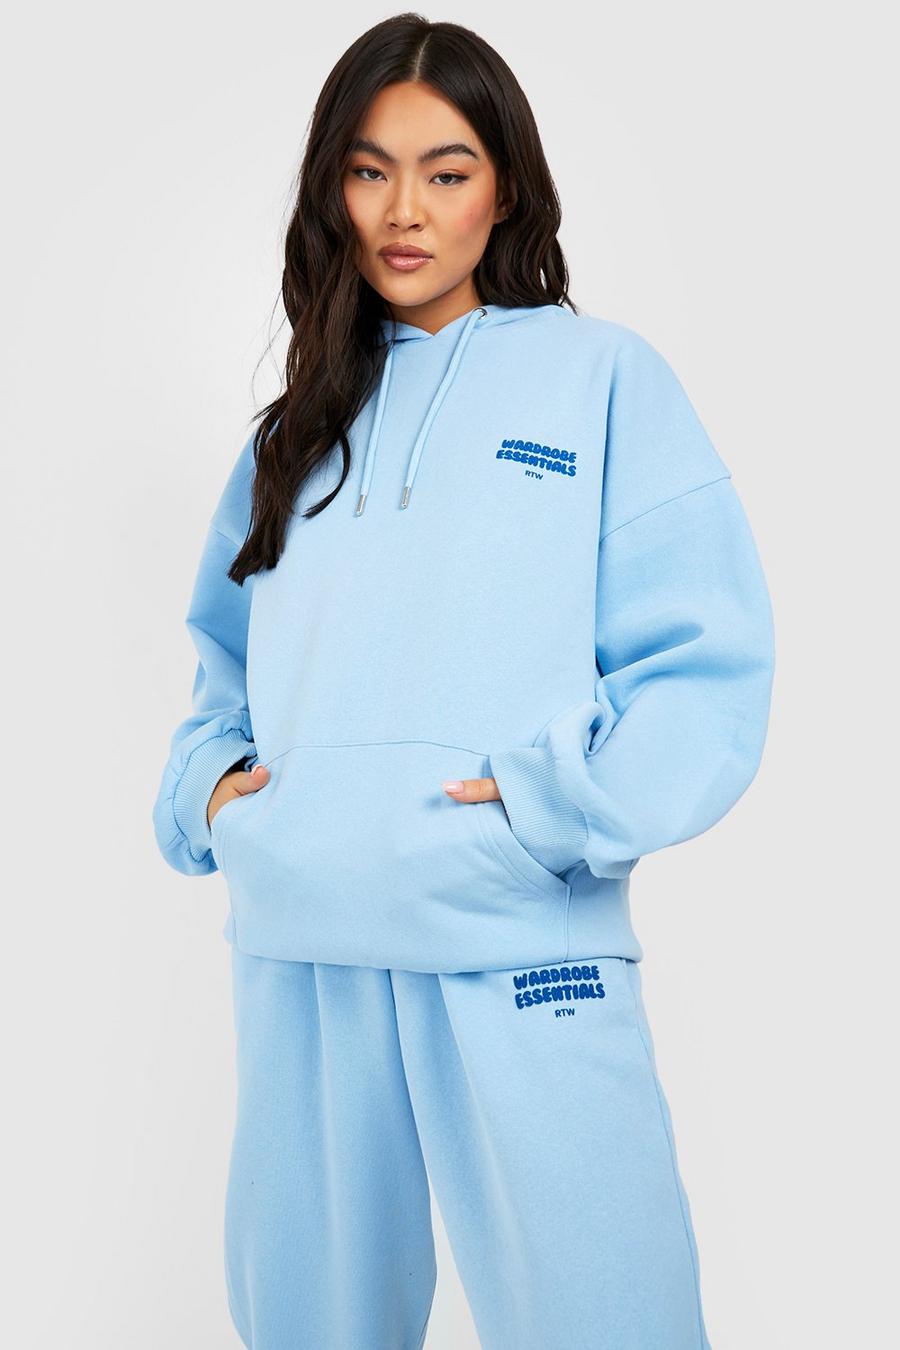 Sudadera oversize con capucha y eslogan Wardrobe Essentials, Light blue azzurro